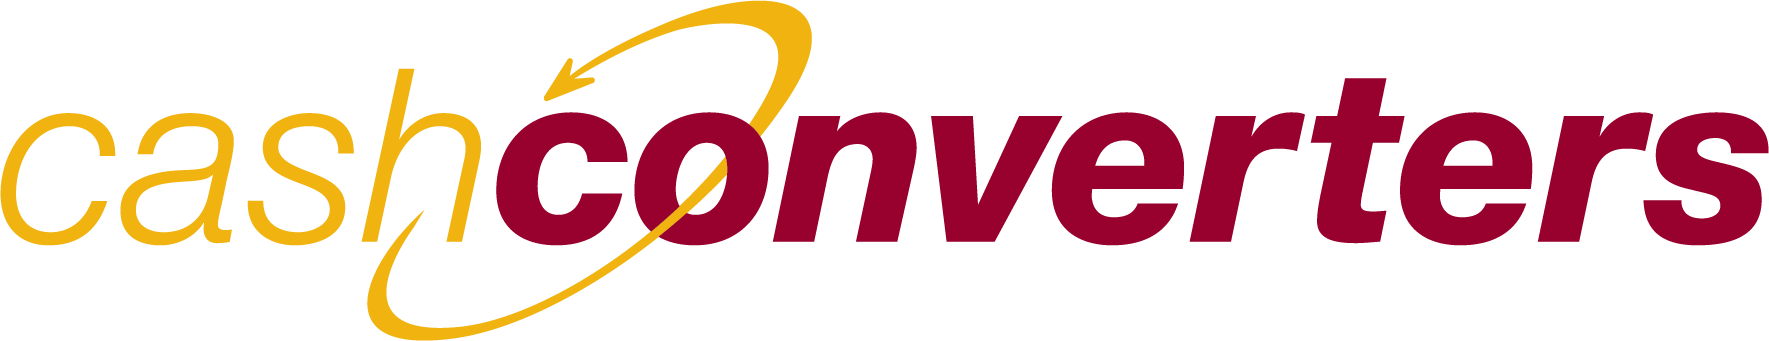 Cash Converters Yellow Red Logo